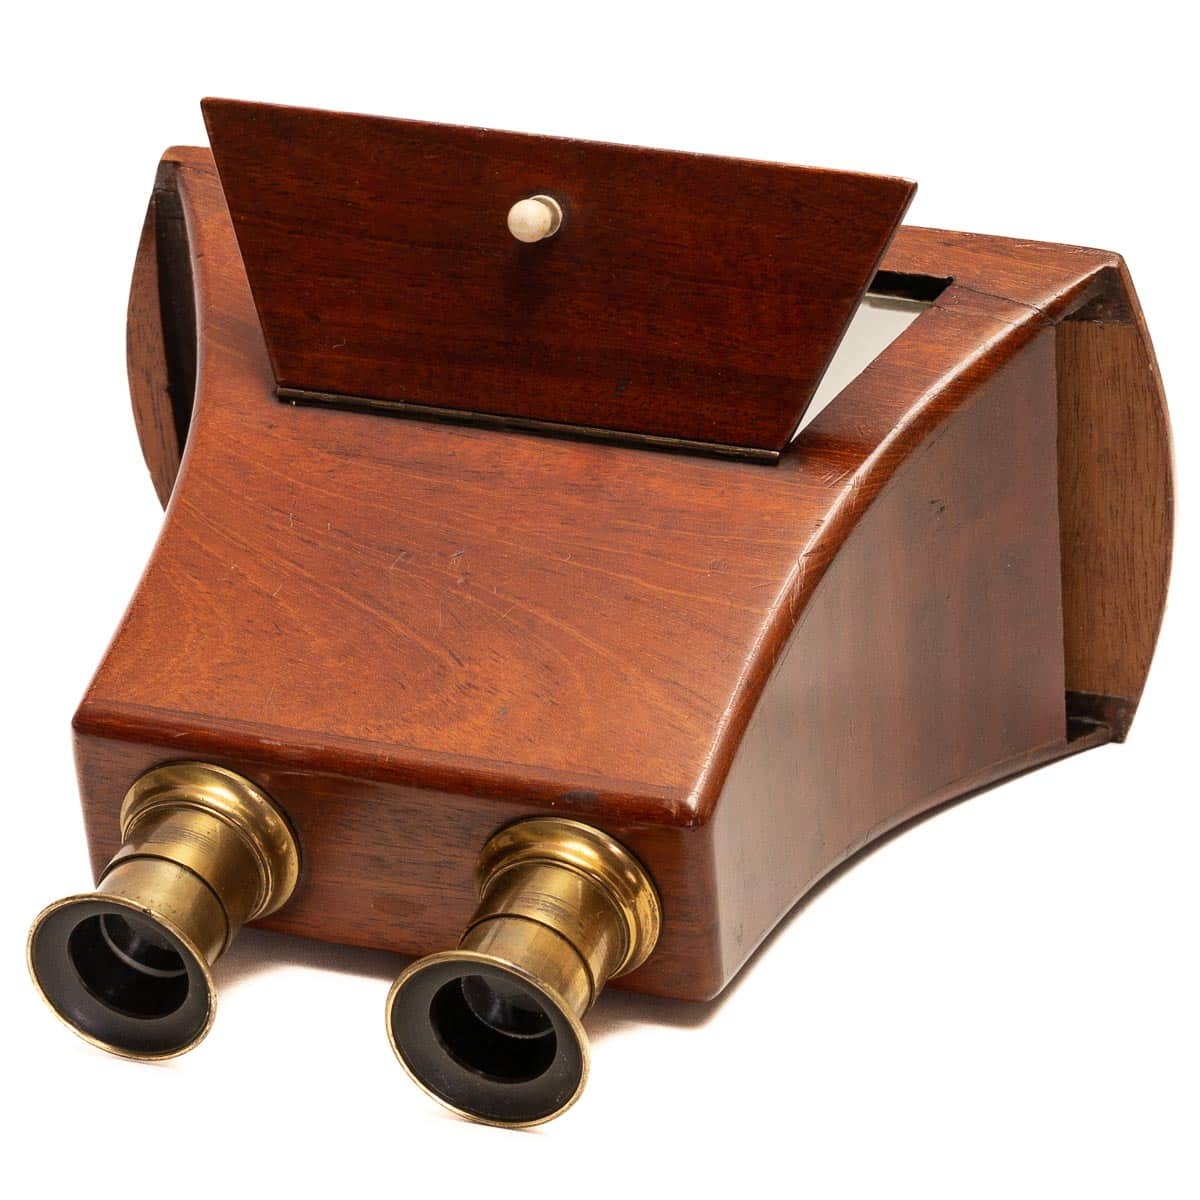 Brewster-type stereoscope